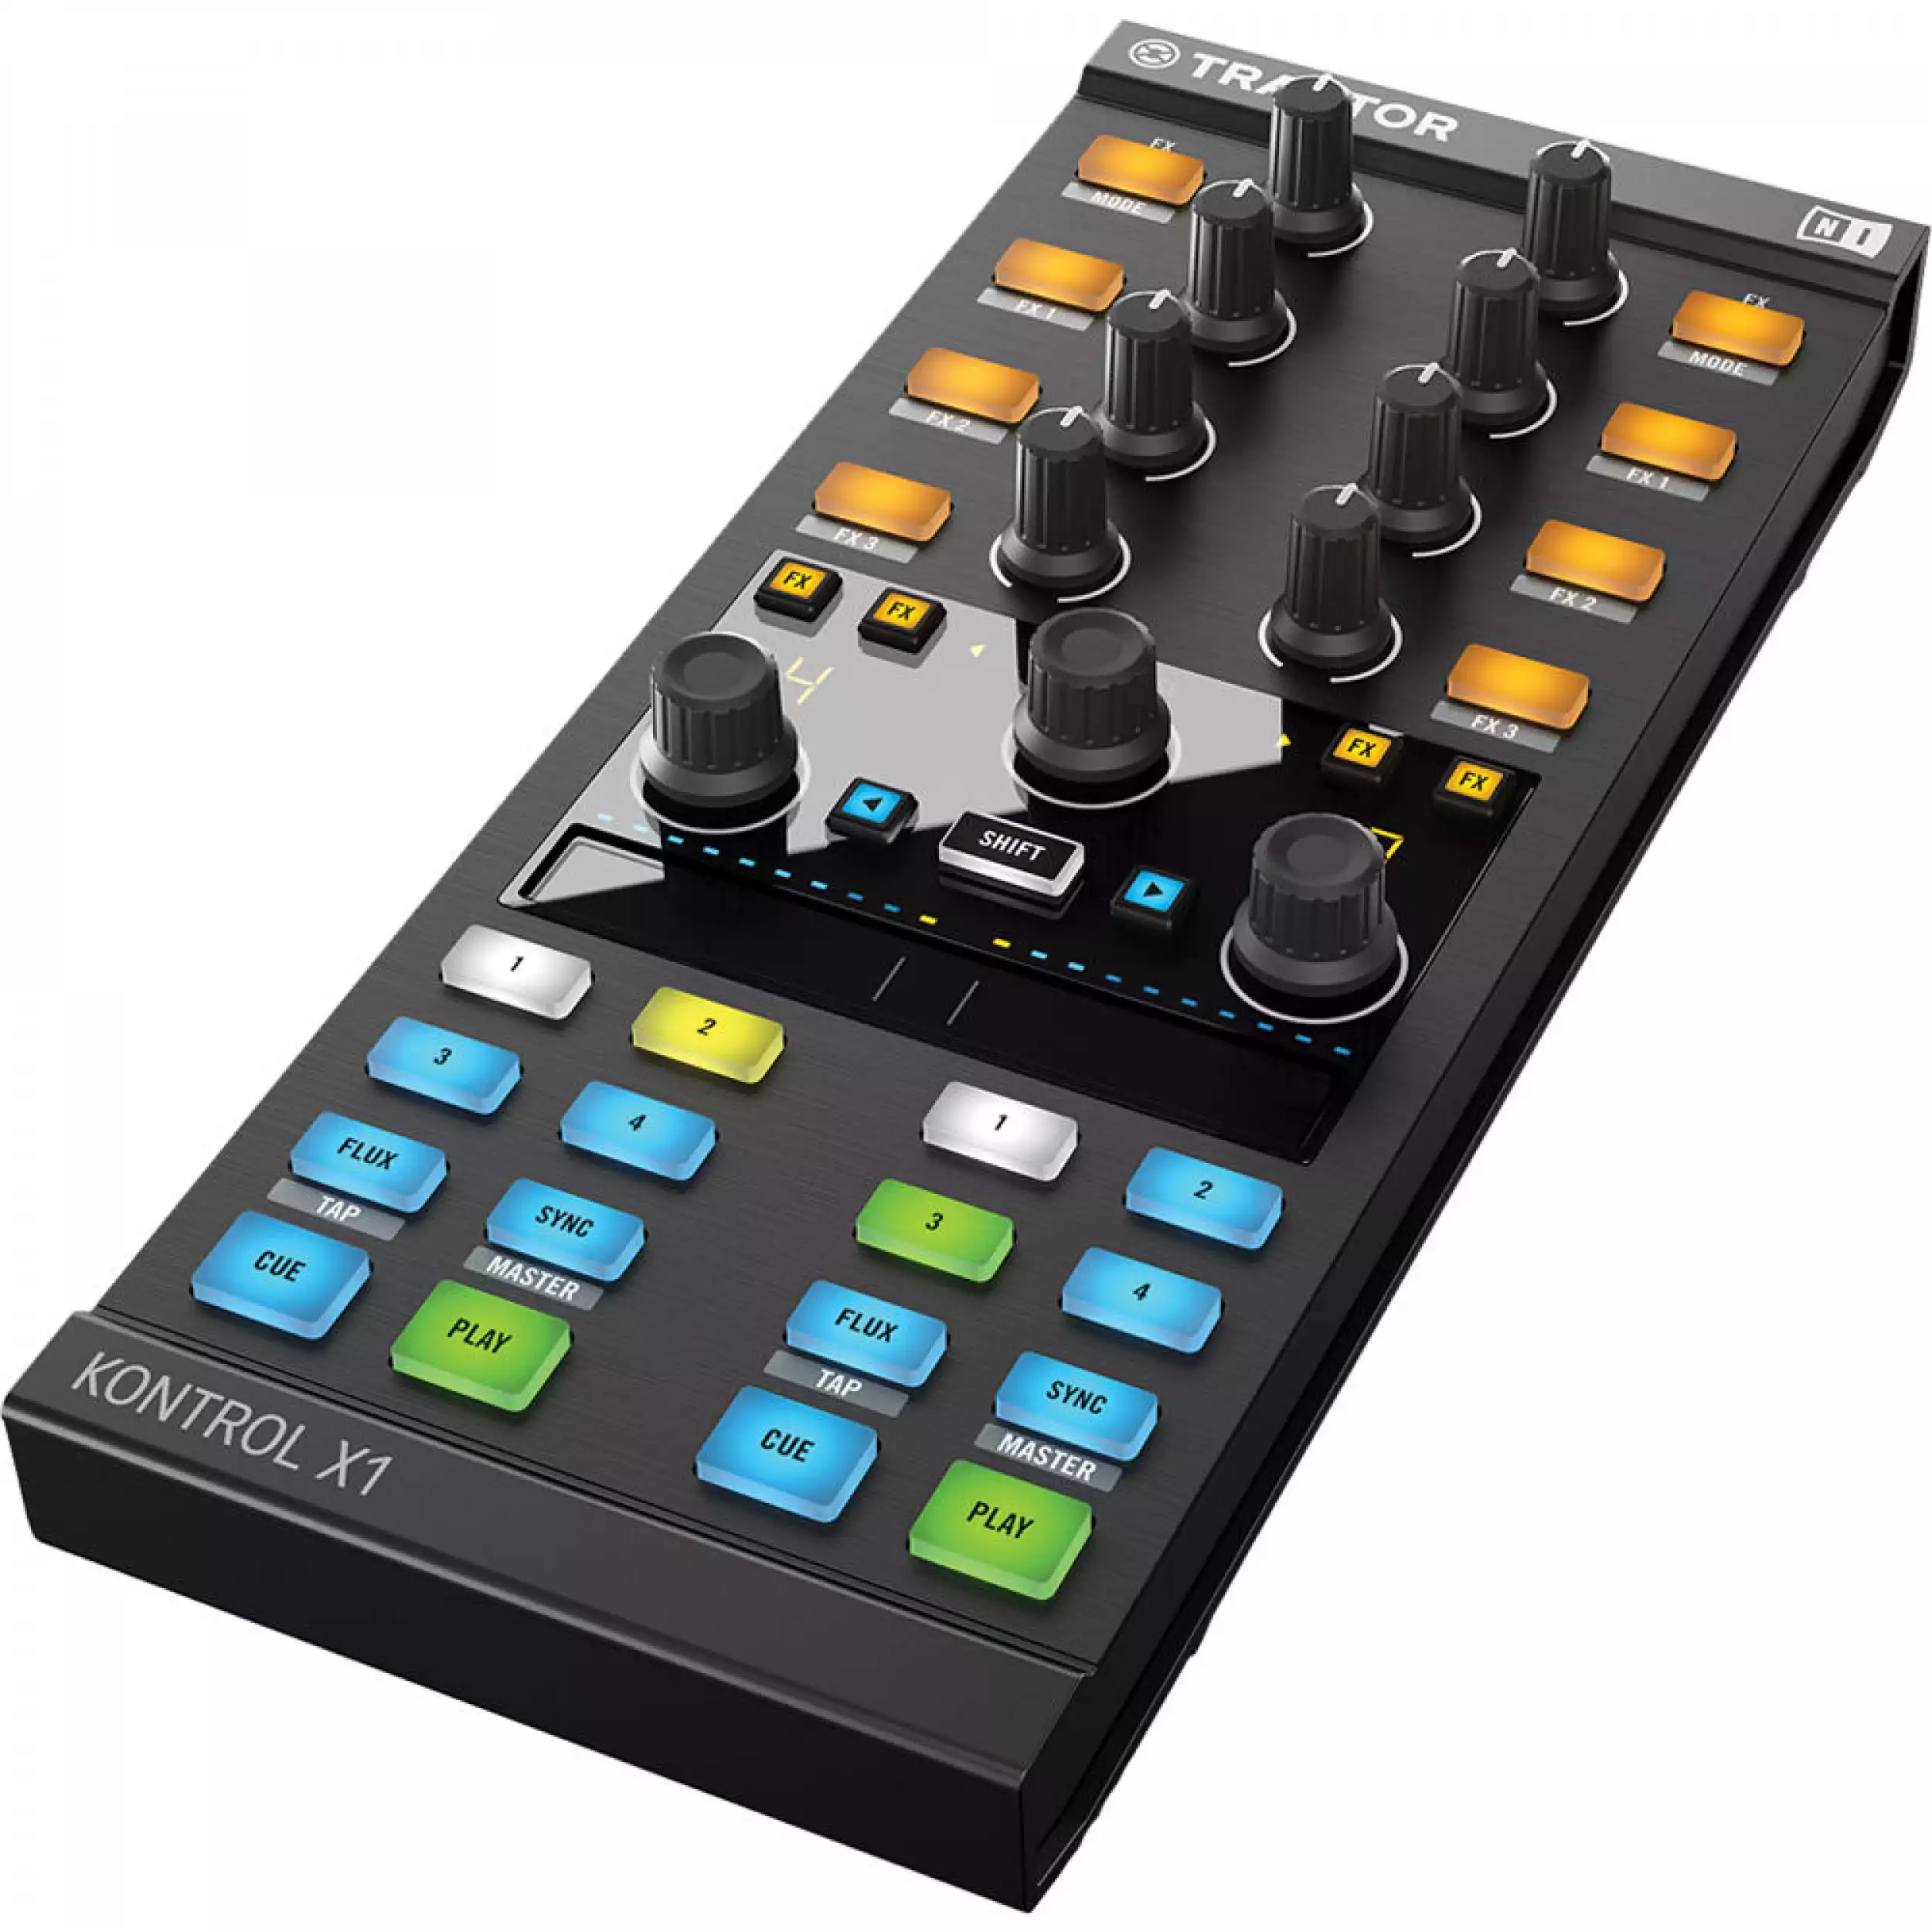 NATIVE INSTRUMENTS TRAKTOR KONTROL X1 MK2 - DJ kontroler